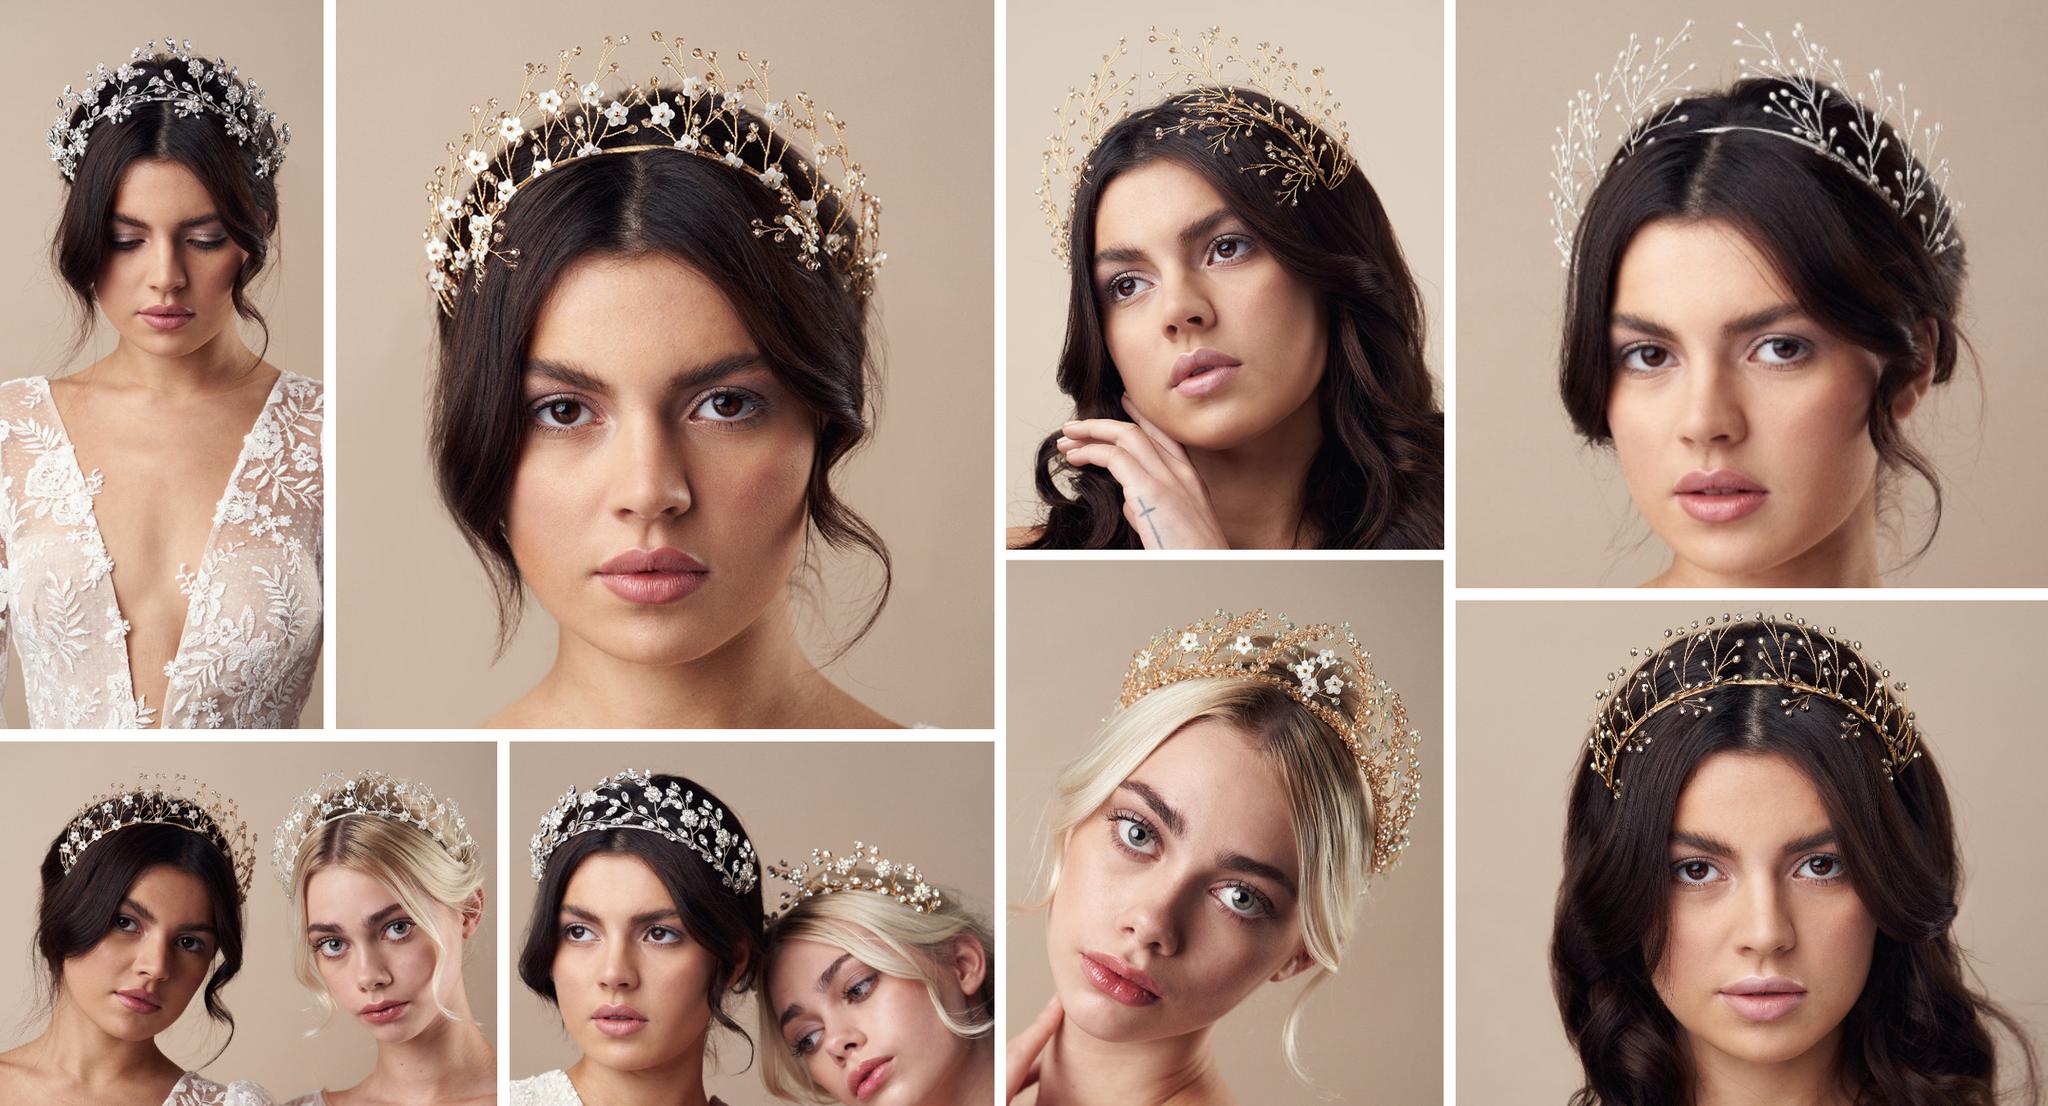 botanical wedding hair accessories - crowns